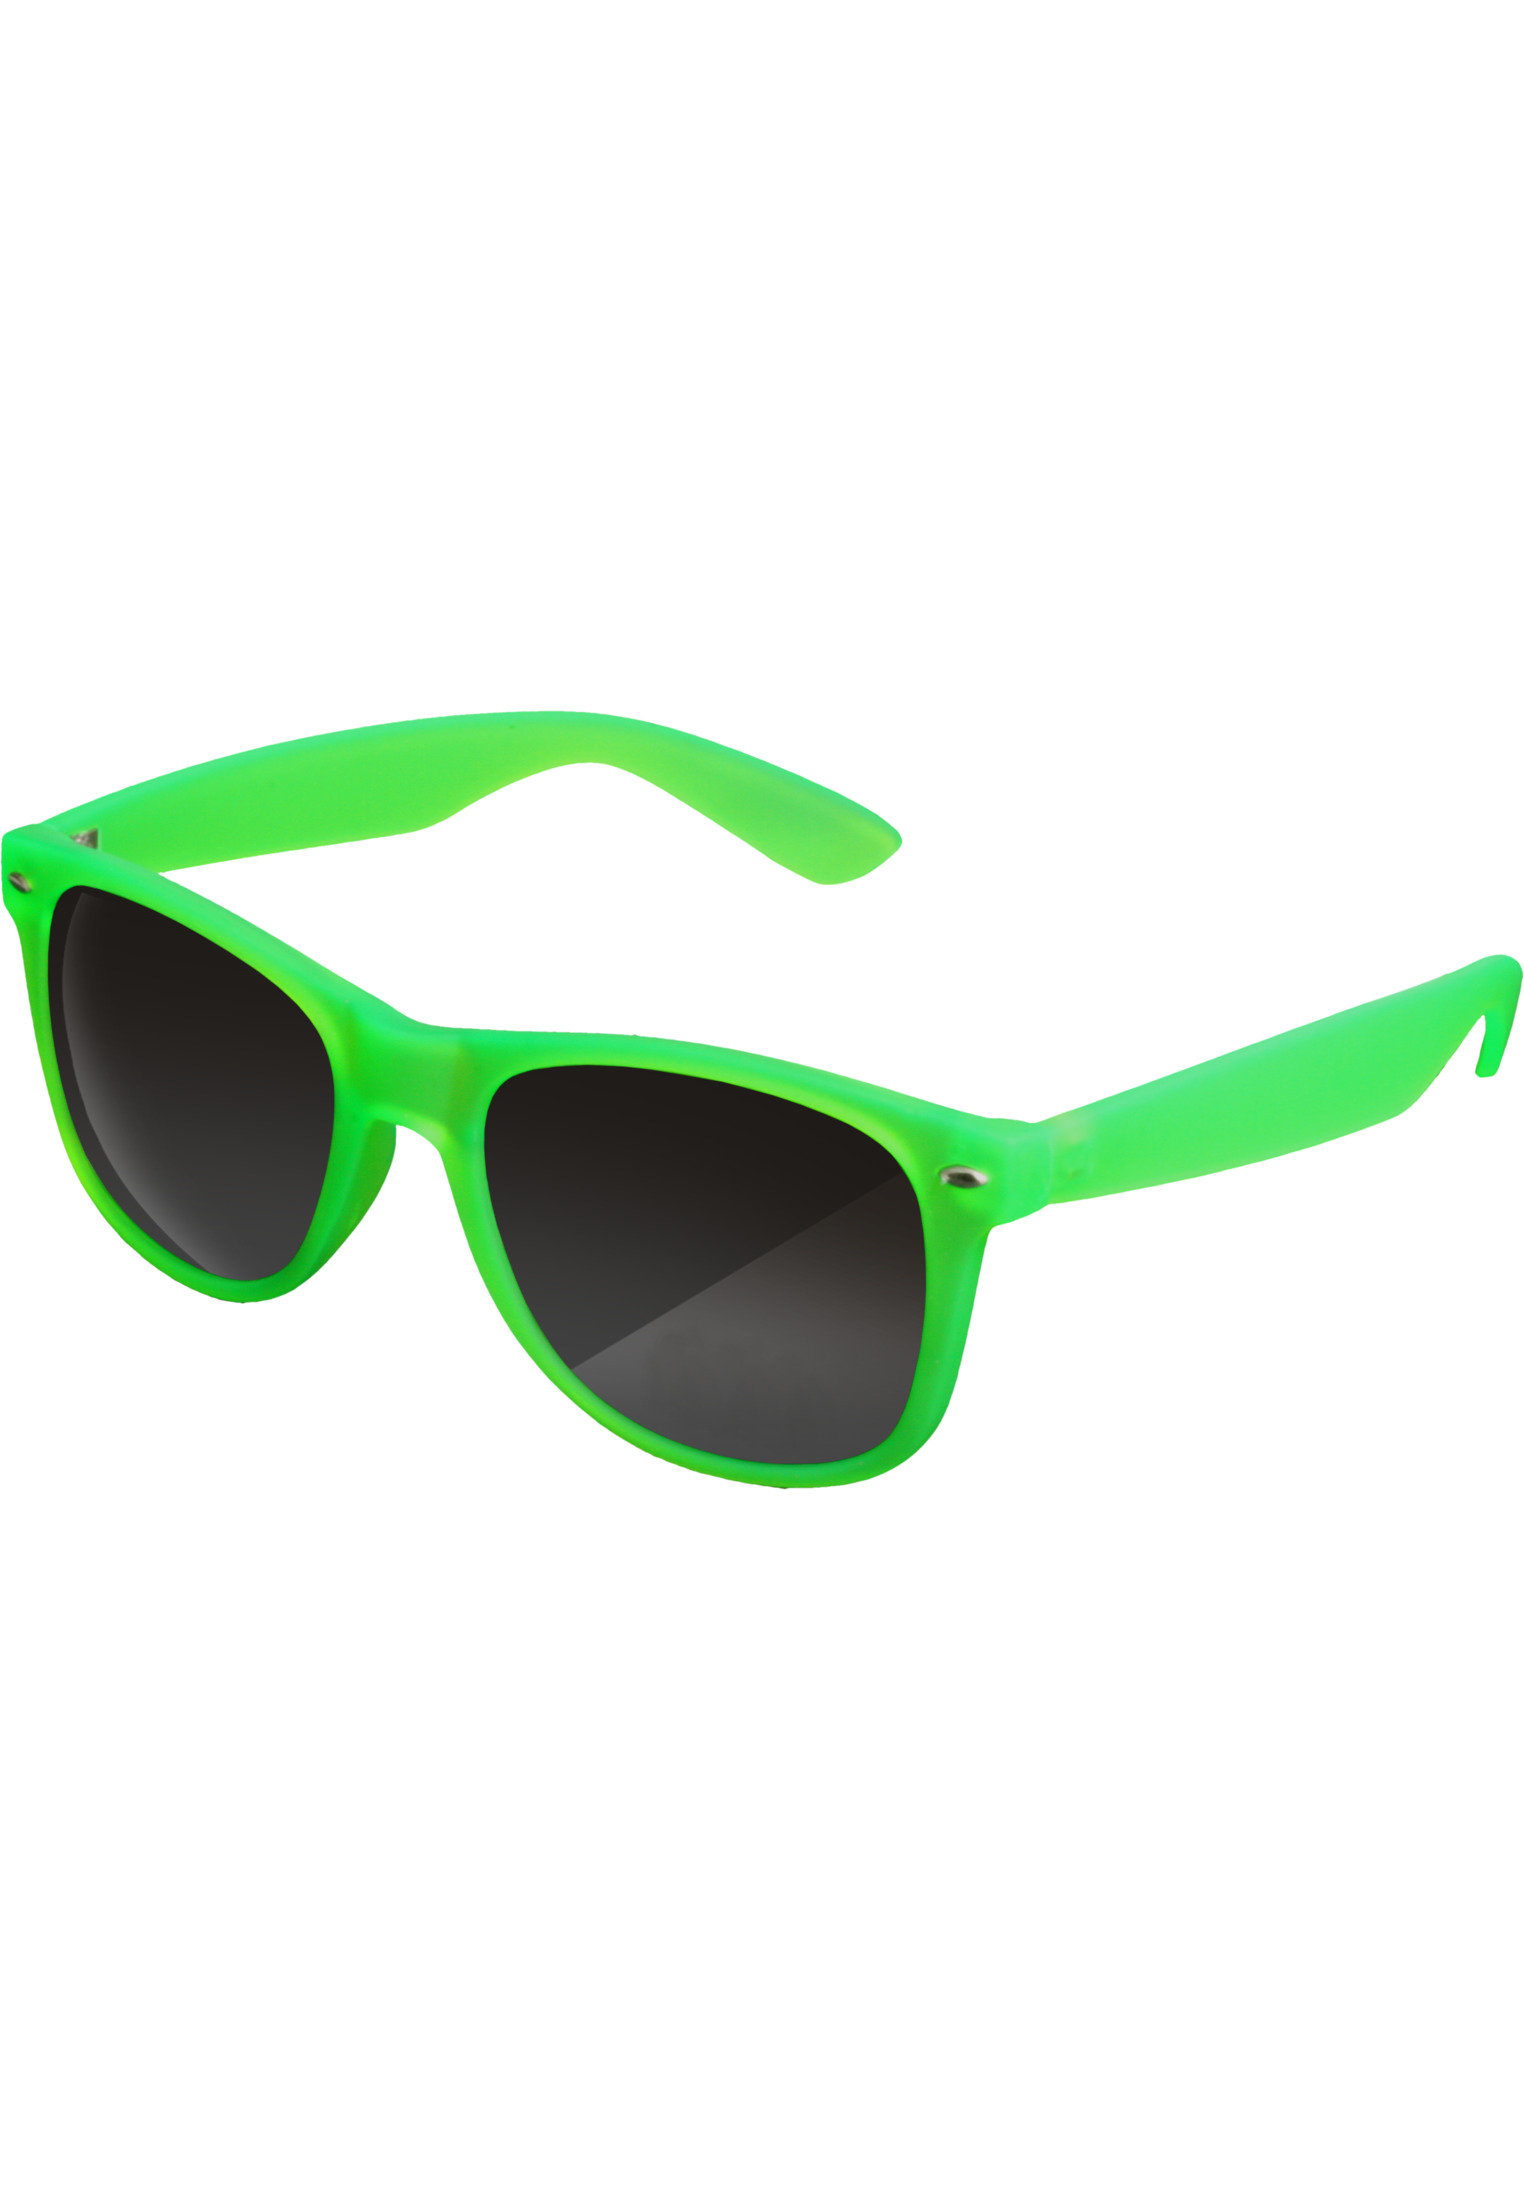 Likoma neongreen sunglasses